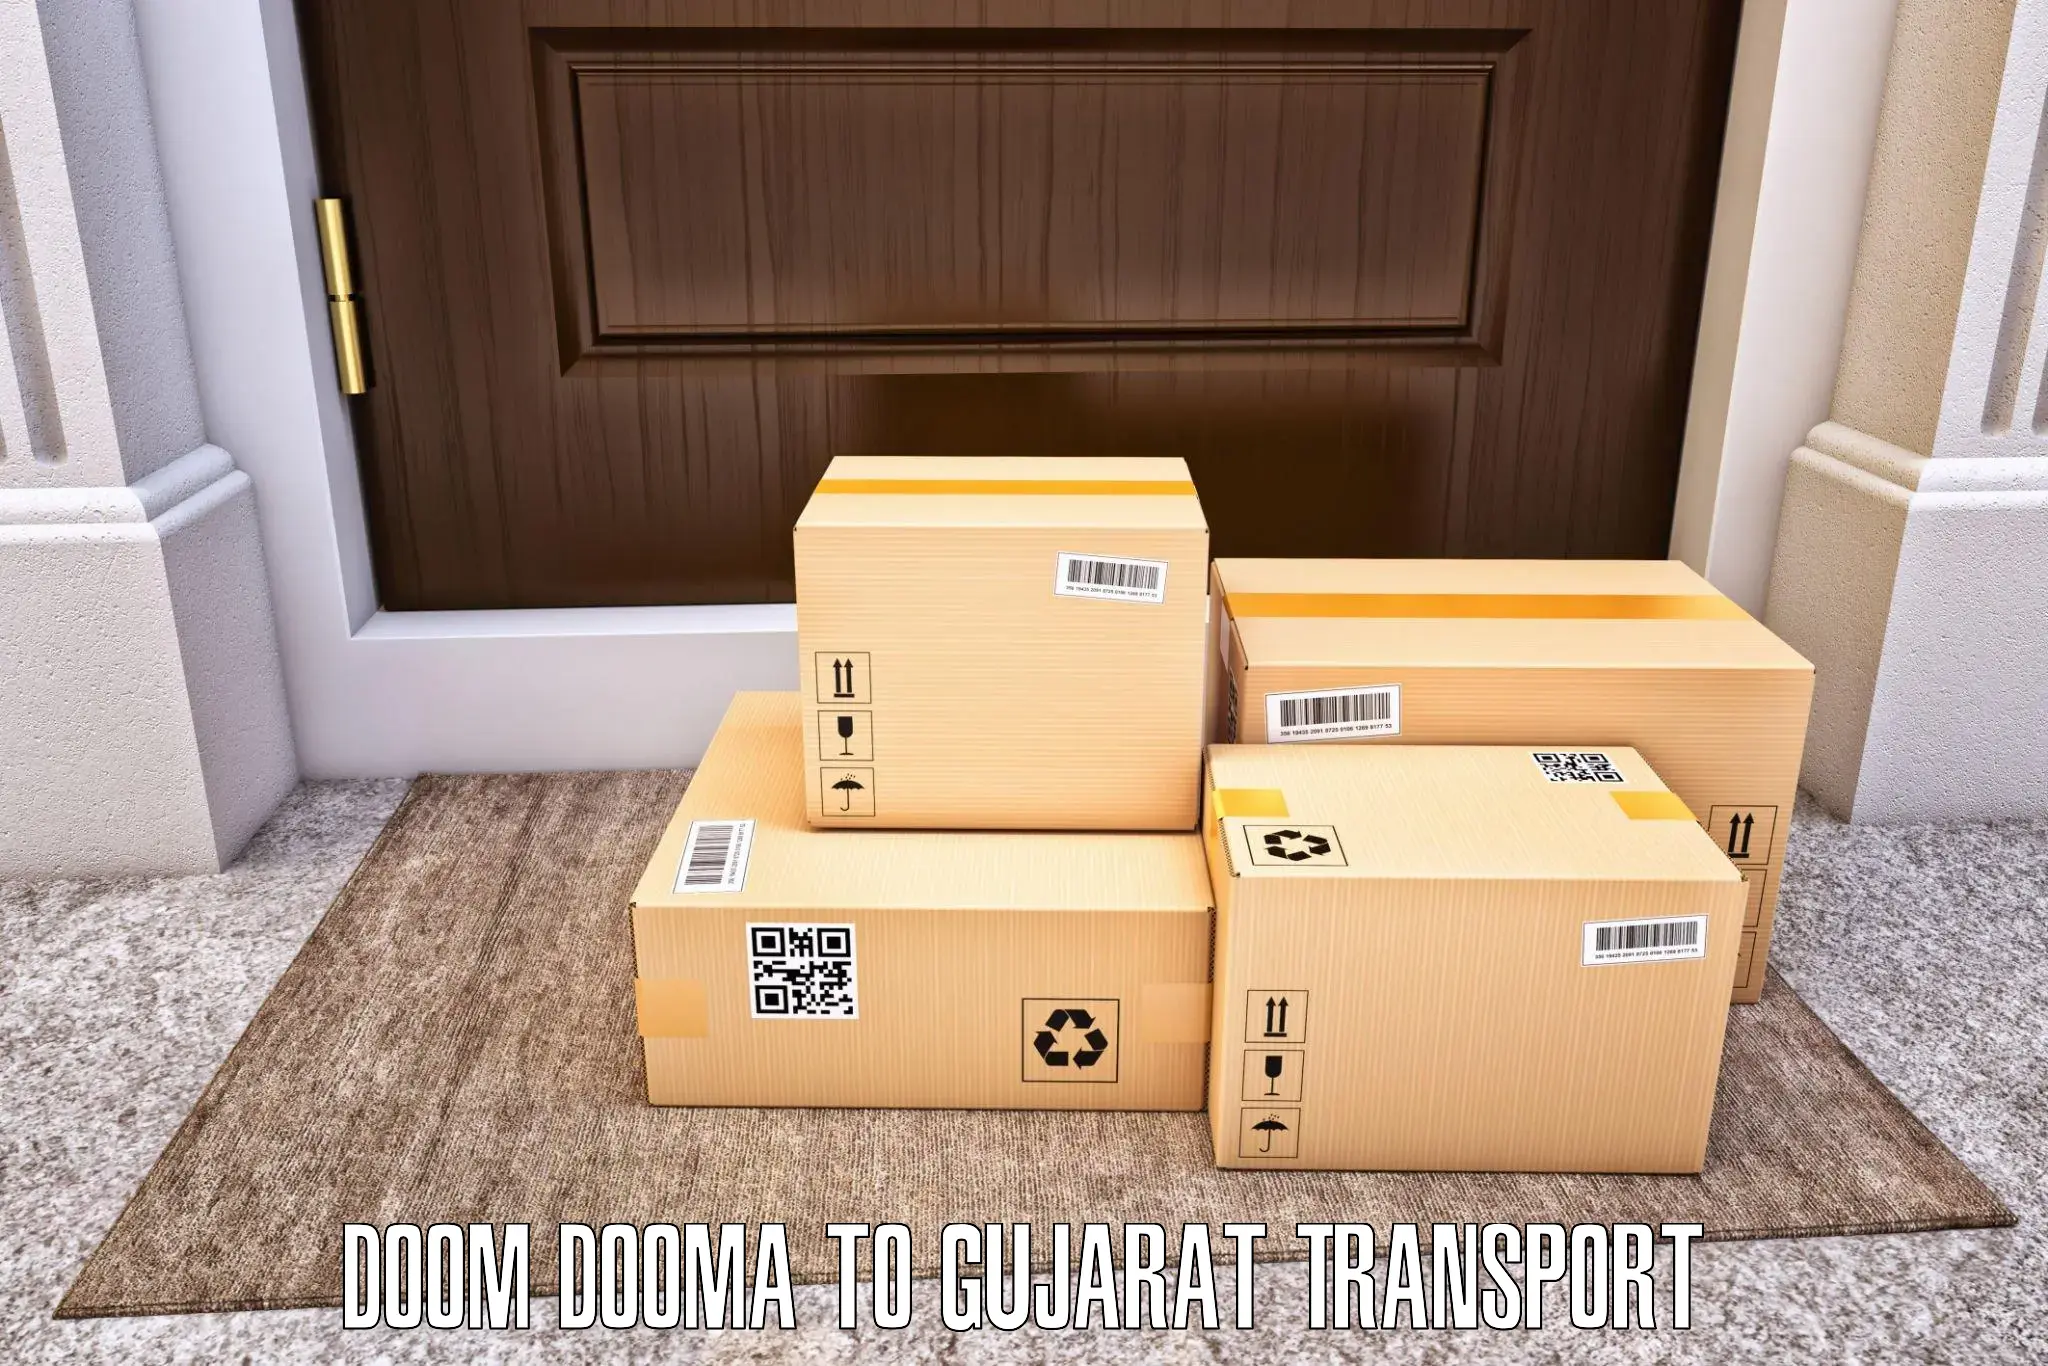 Air cargo transport services in Doom Dooma to Katodara